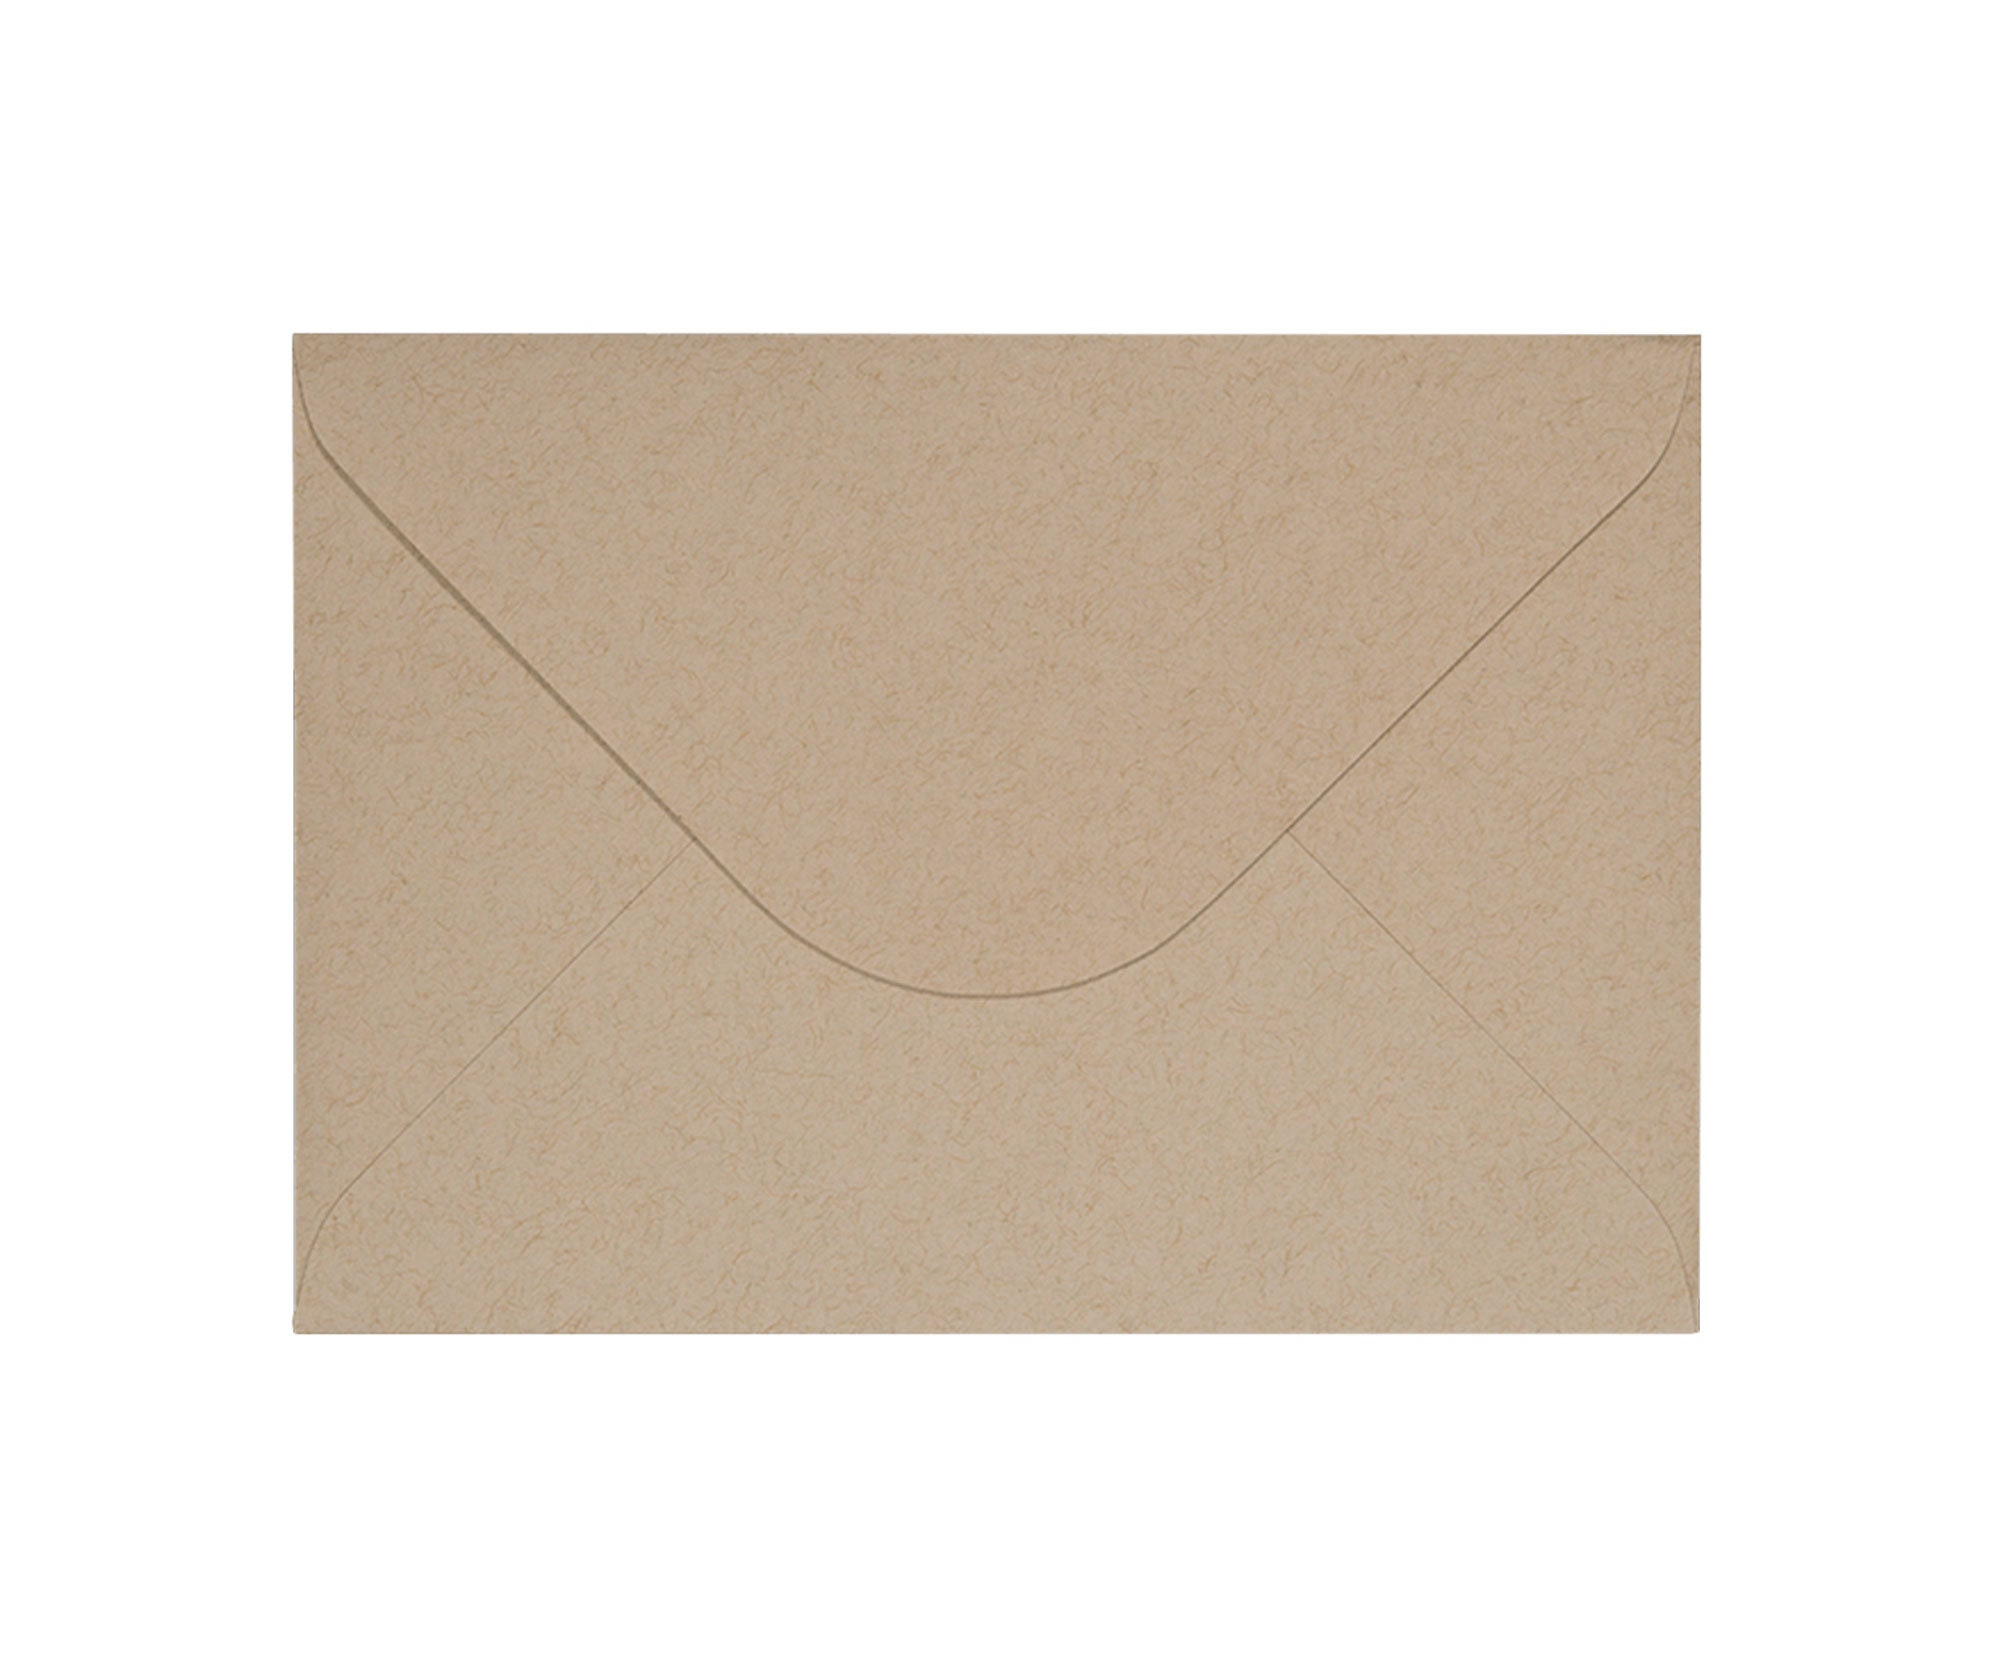 Half Shell Oyster Greeting Card Blank Folded Card - Etsy